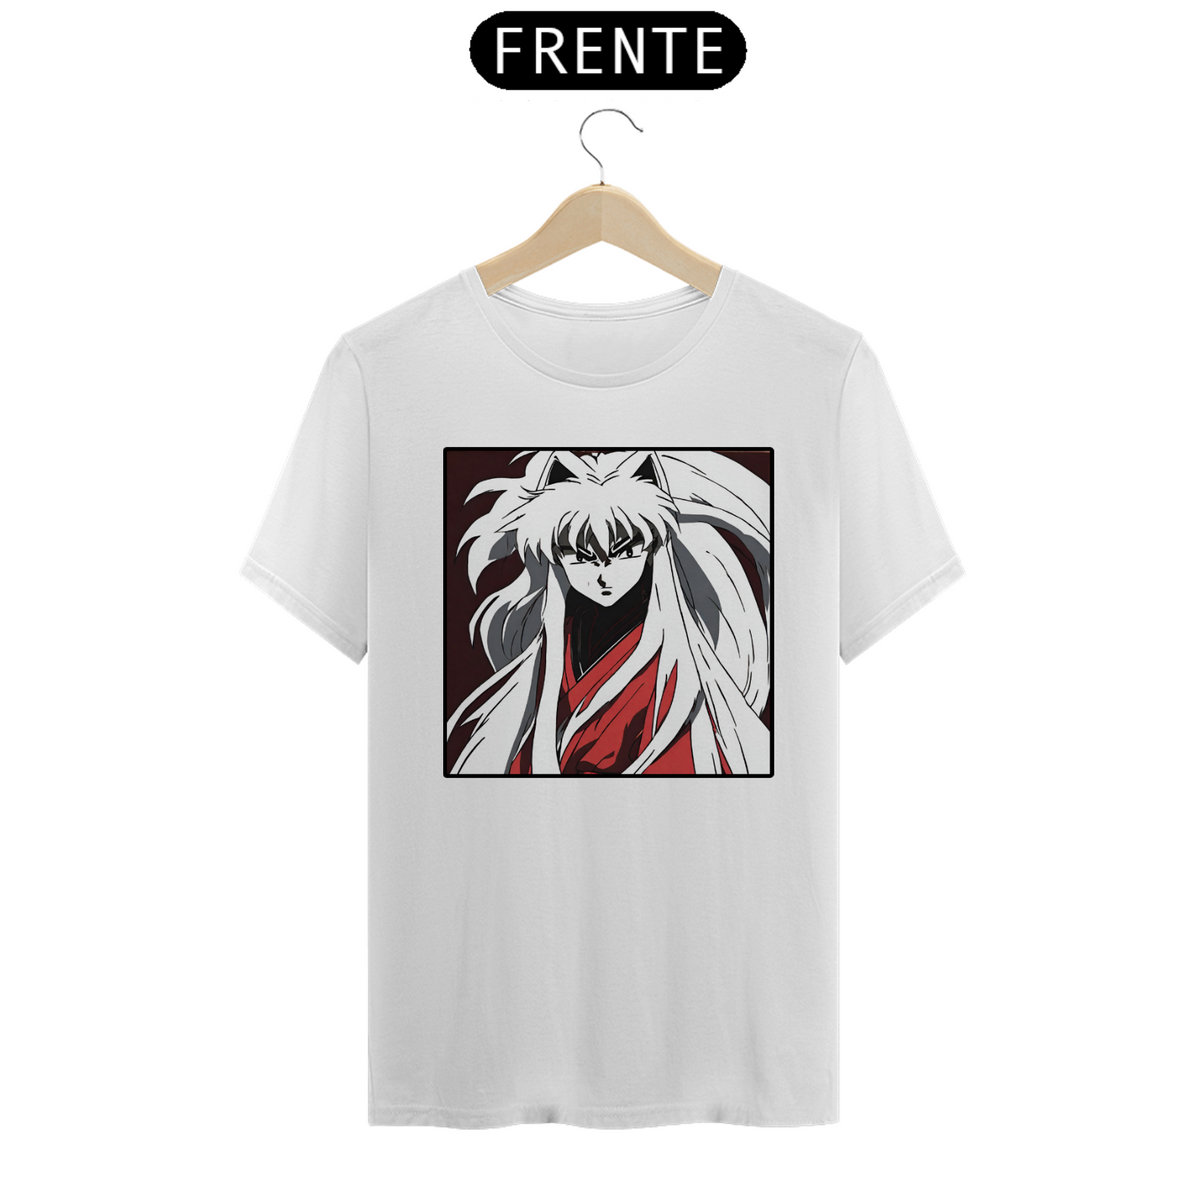 Nome do produto: T-shirt - Inuyasha exclusive 0009